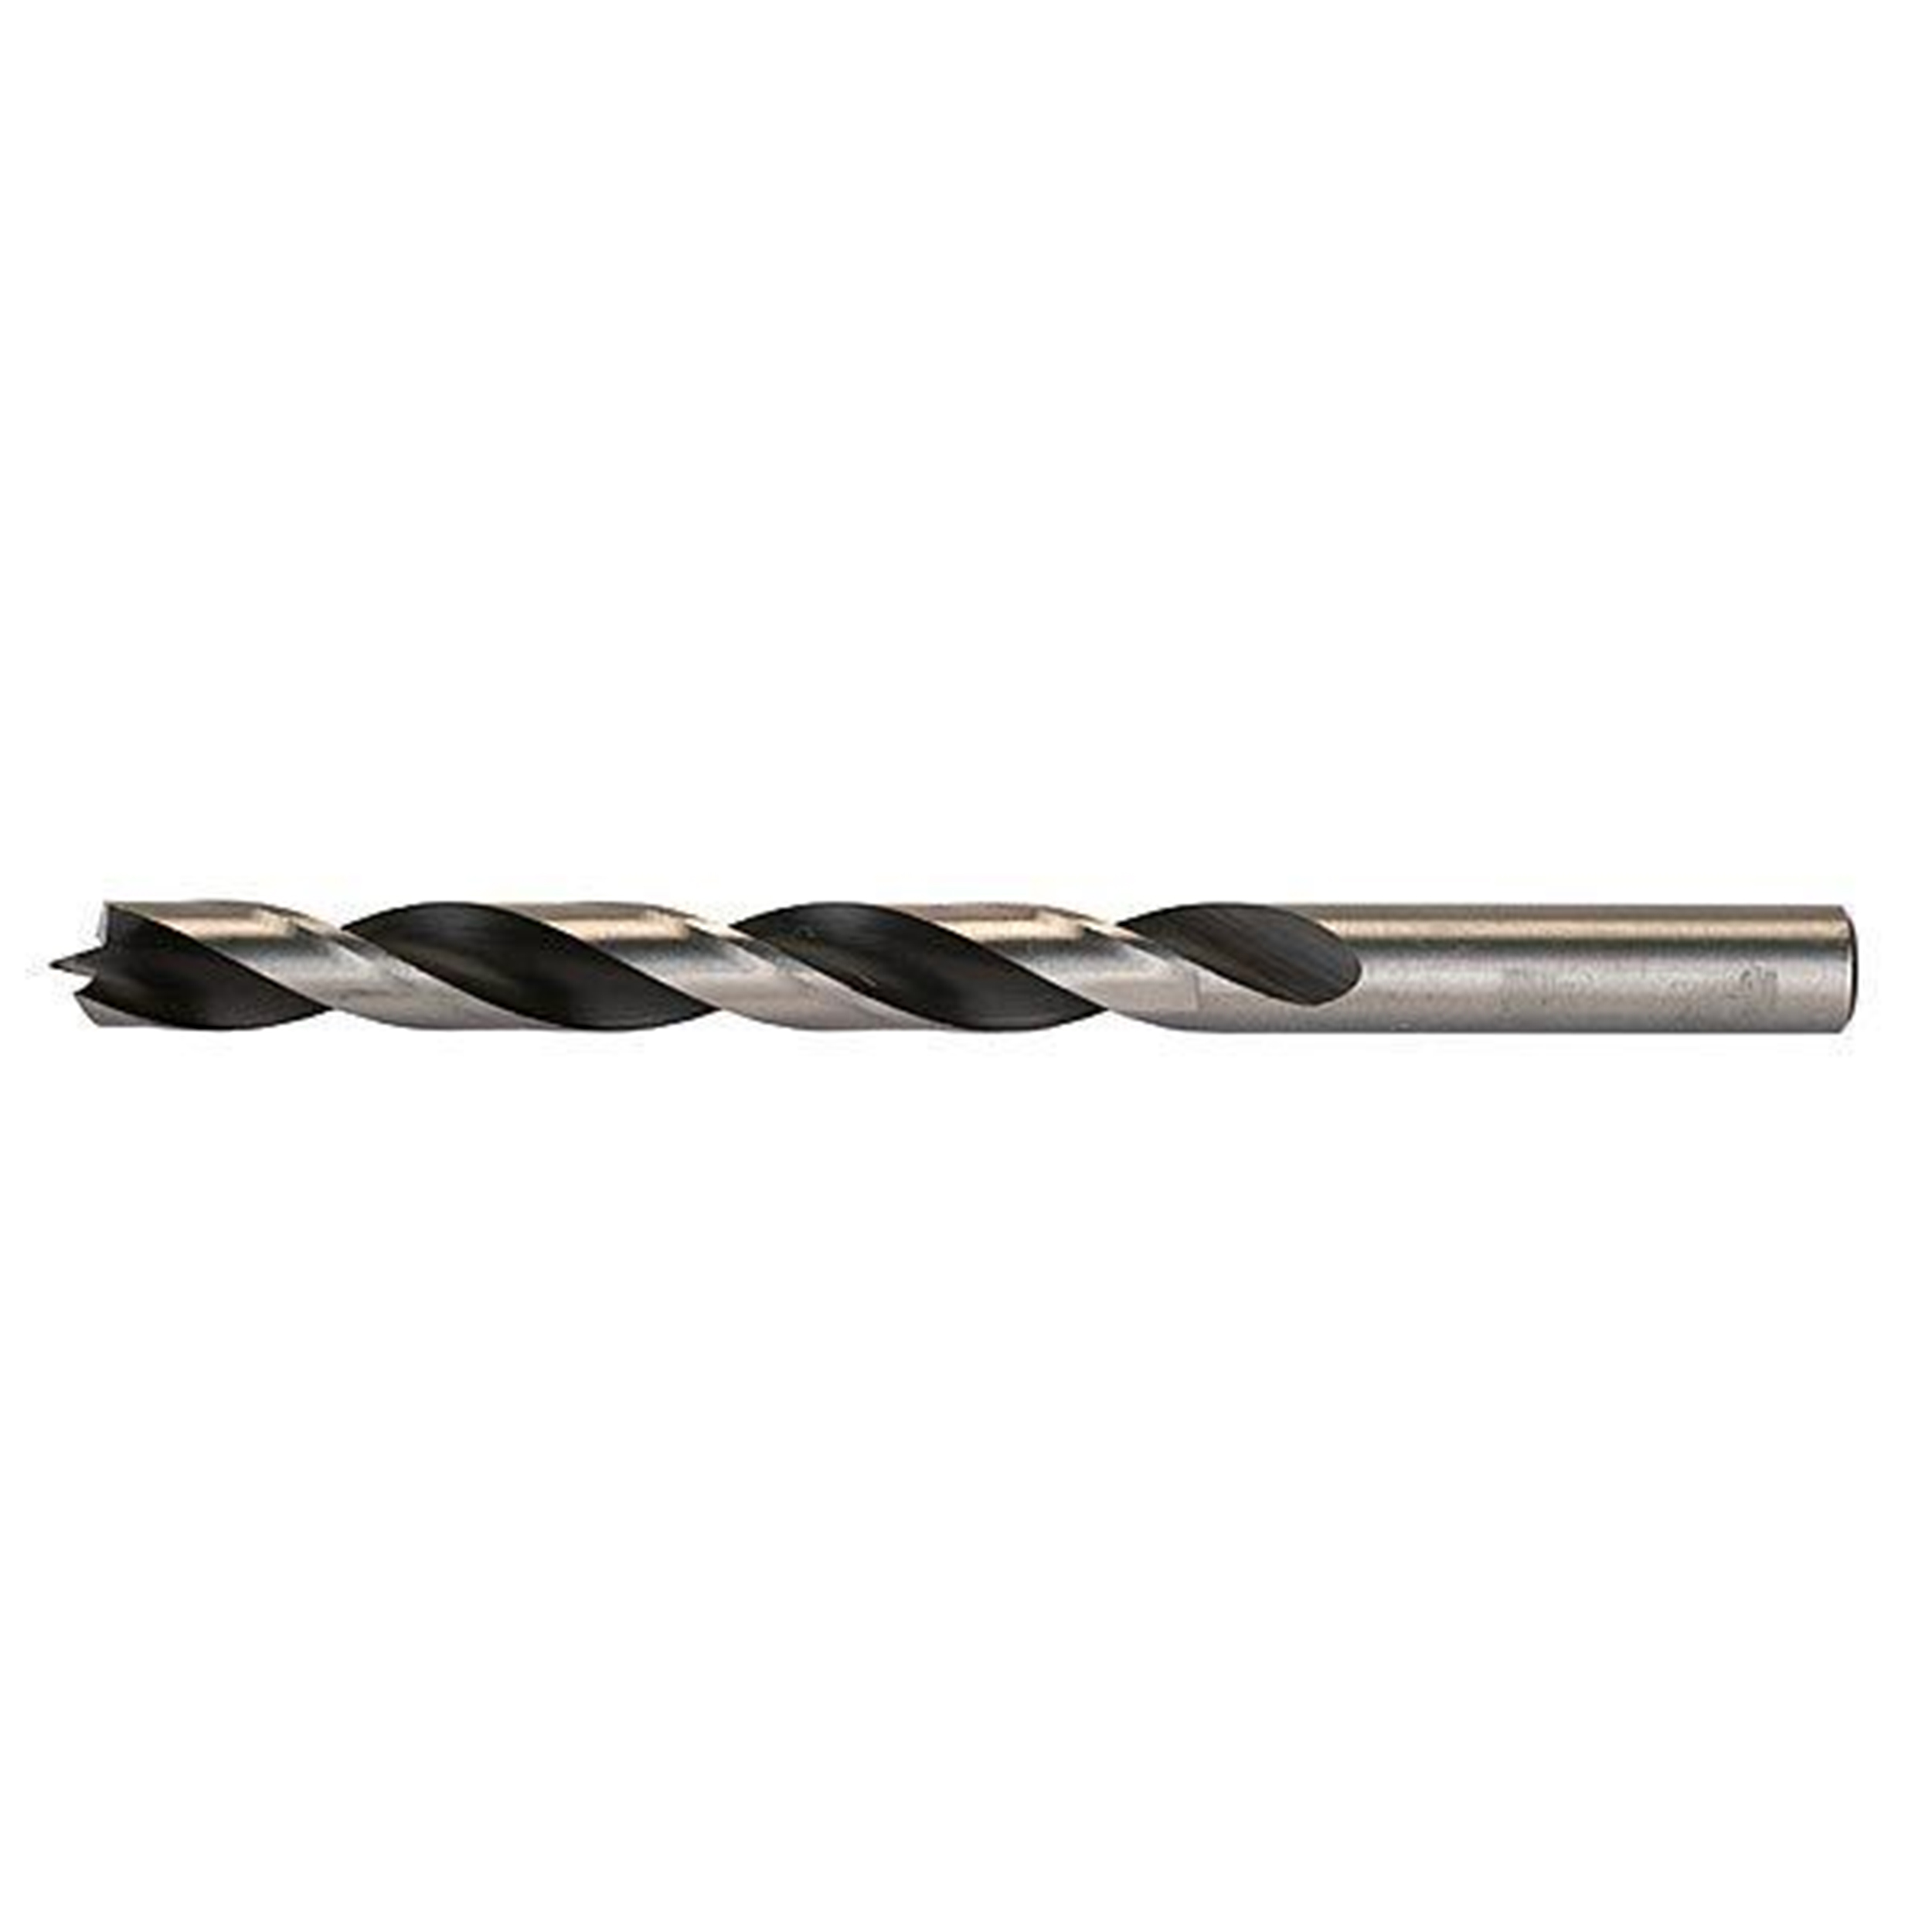 3/8-inch Chrome-vanadium Steel Brad Point Drill Bit